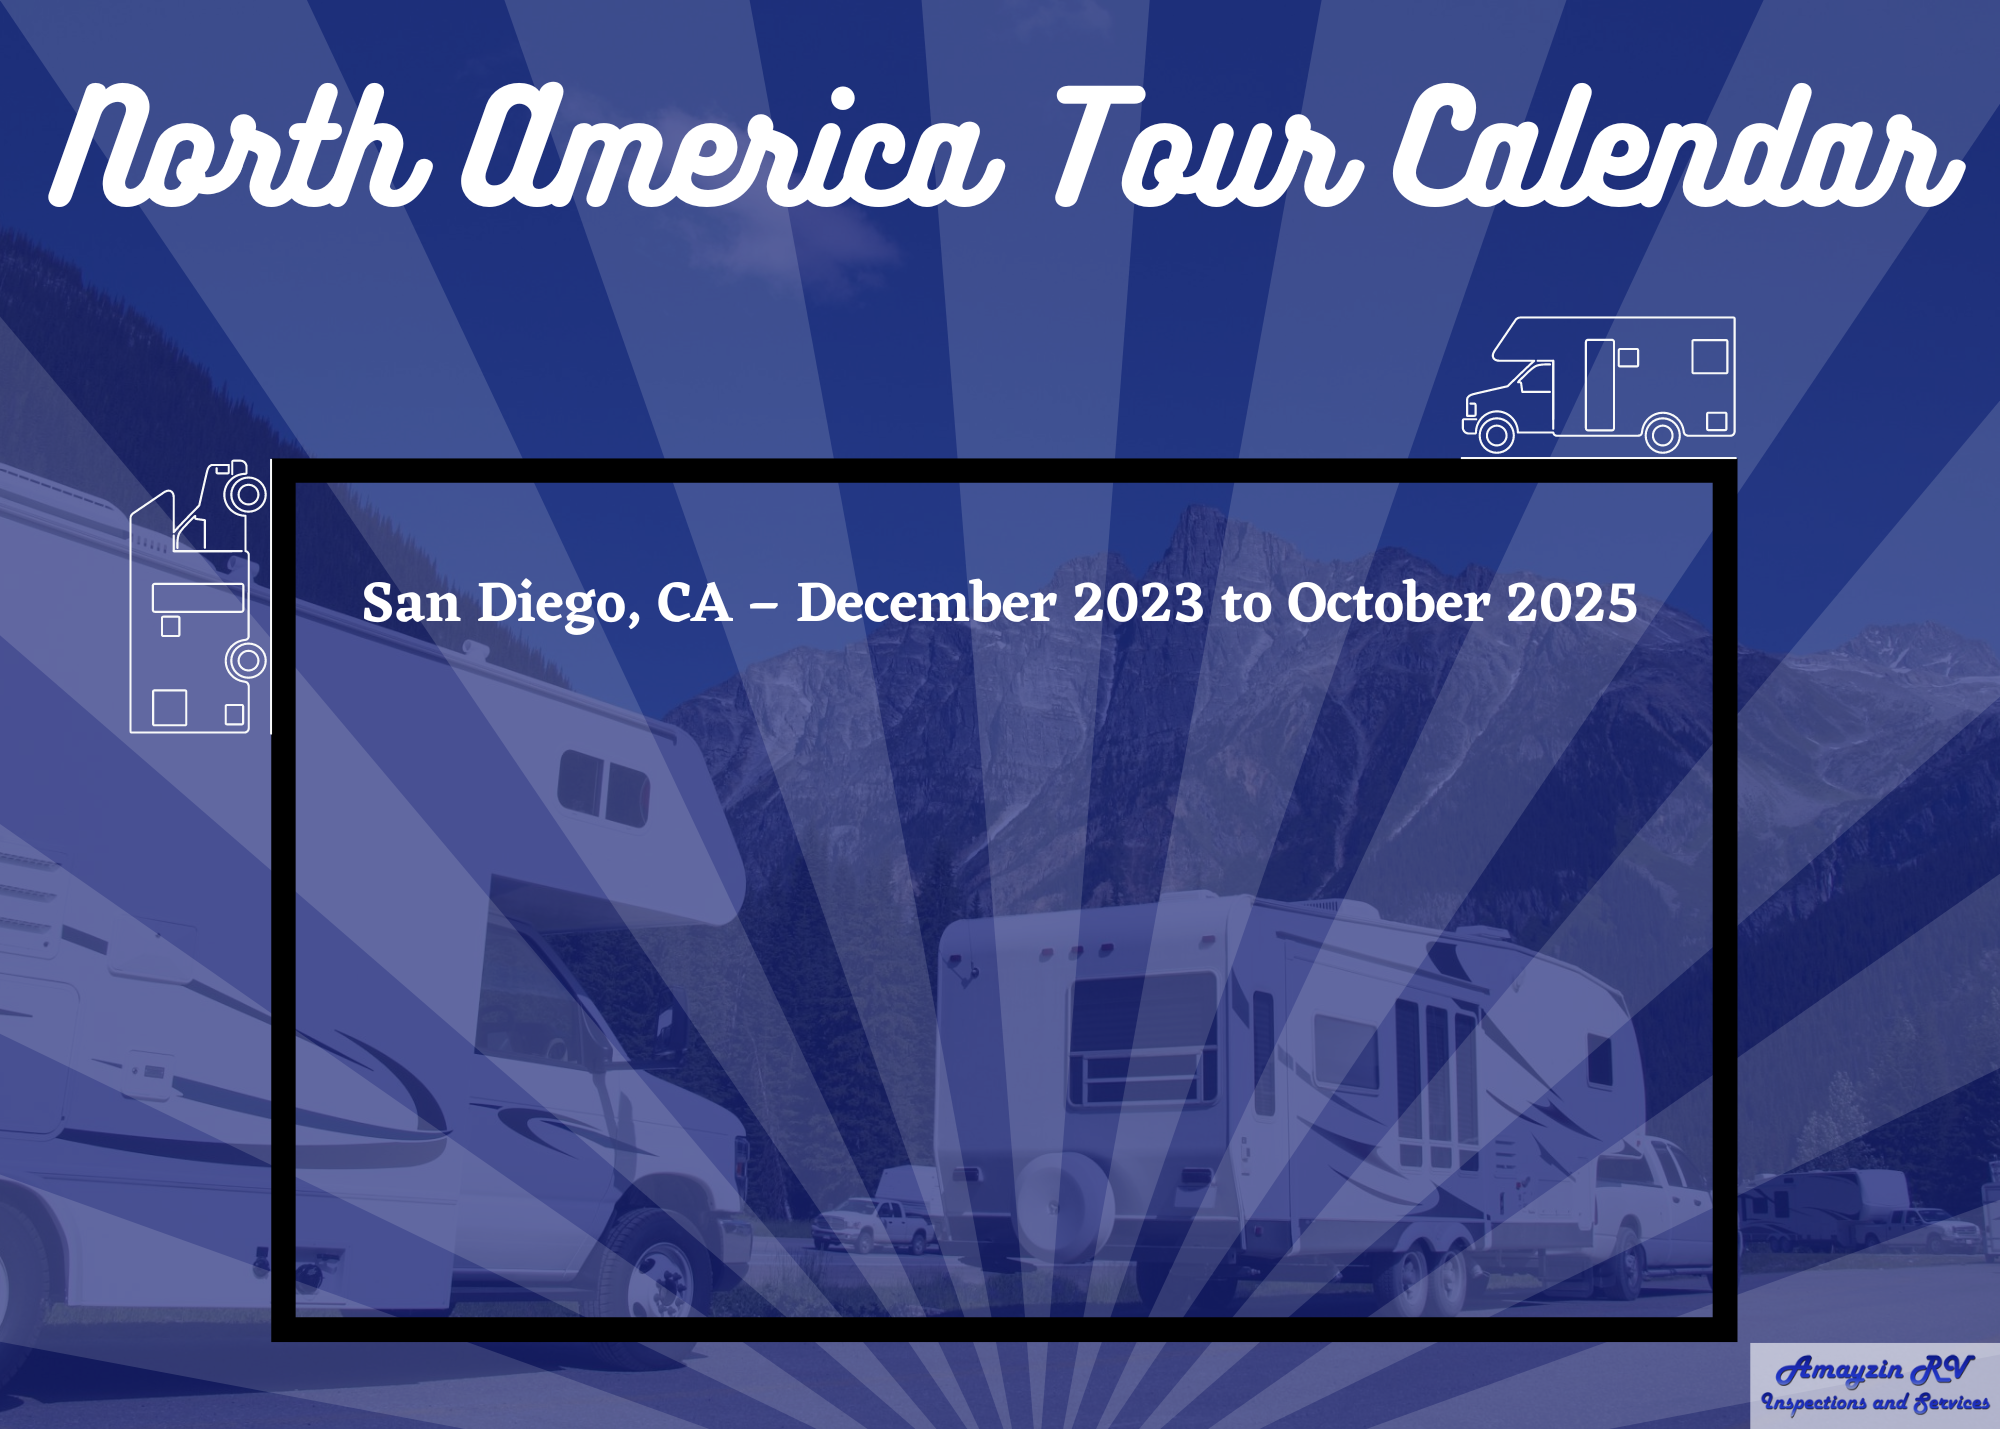 North American Home Inspection Tour Calendar